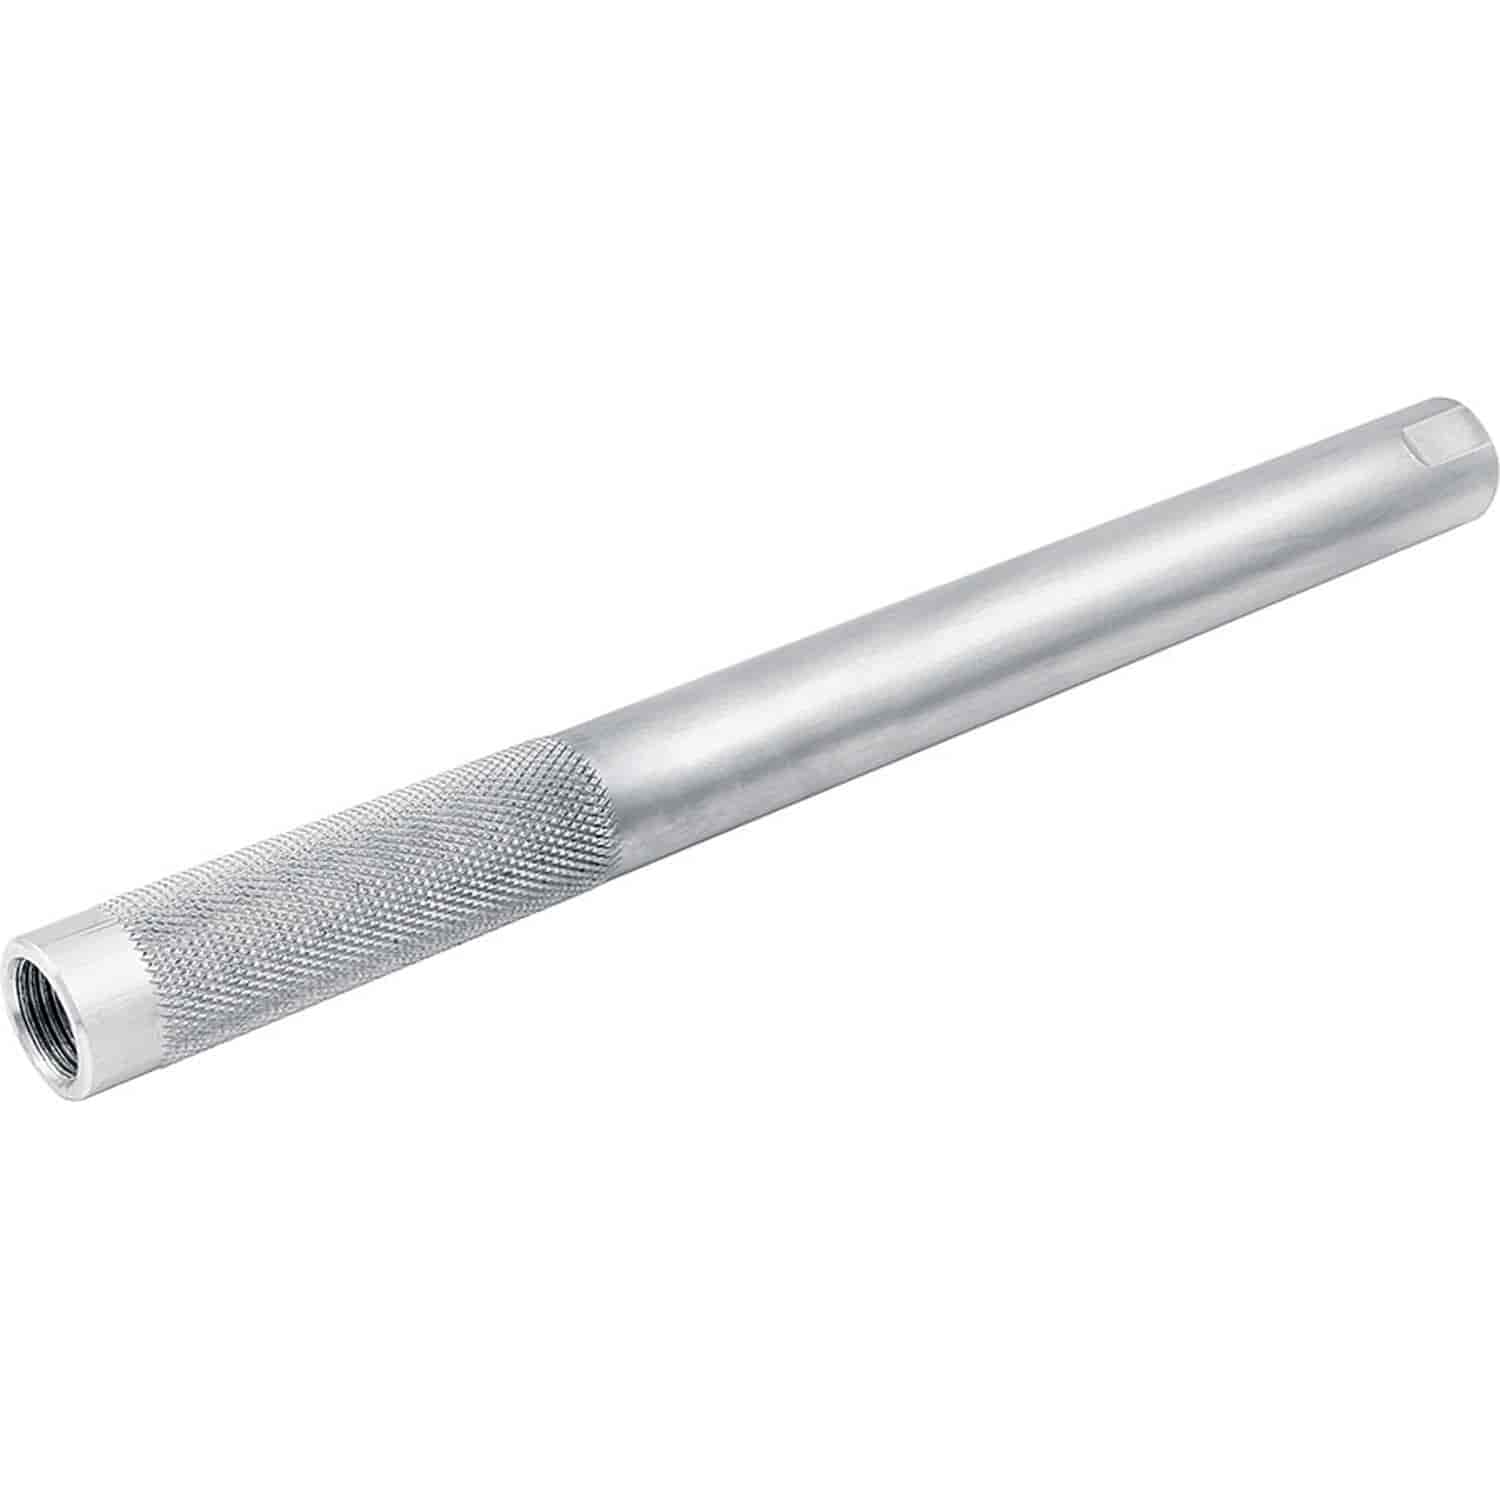 Swedged Aluminum Tie Rod Tube Length: 22"